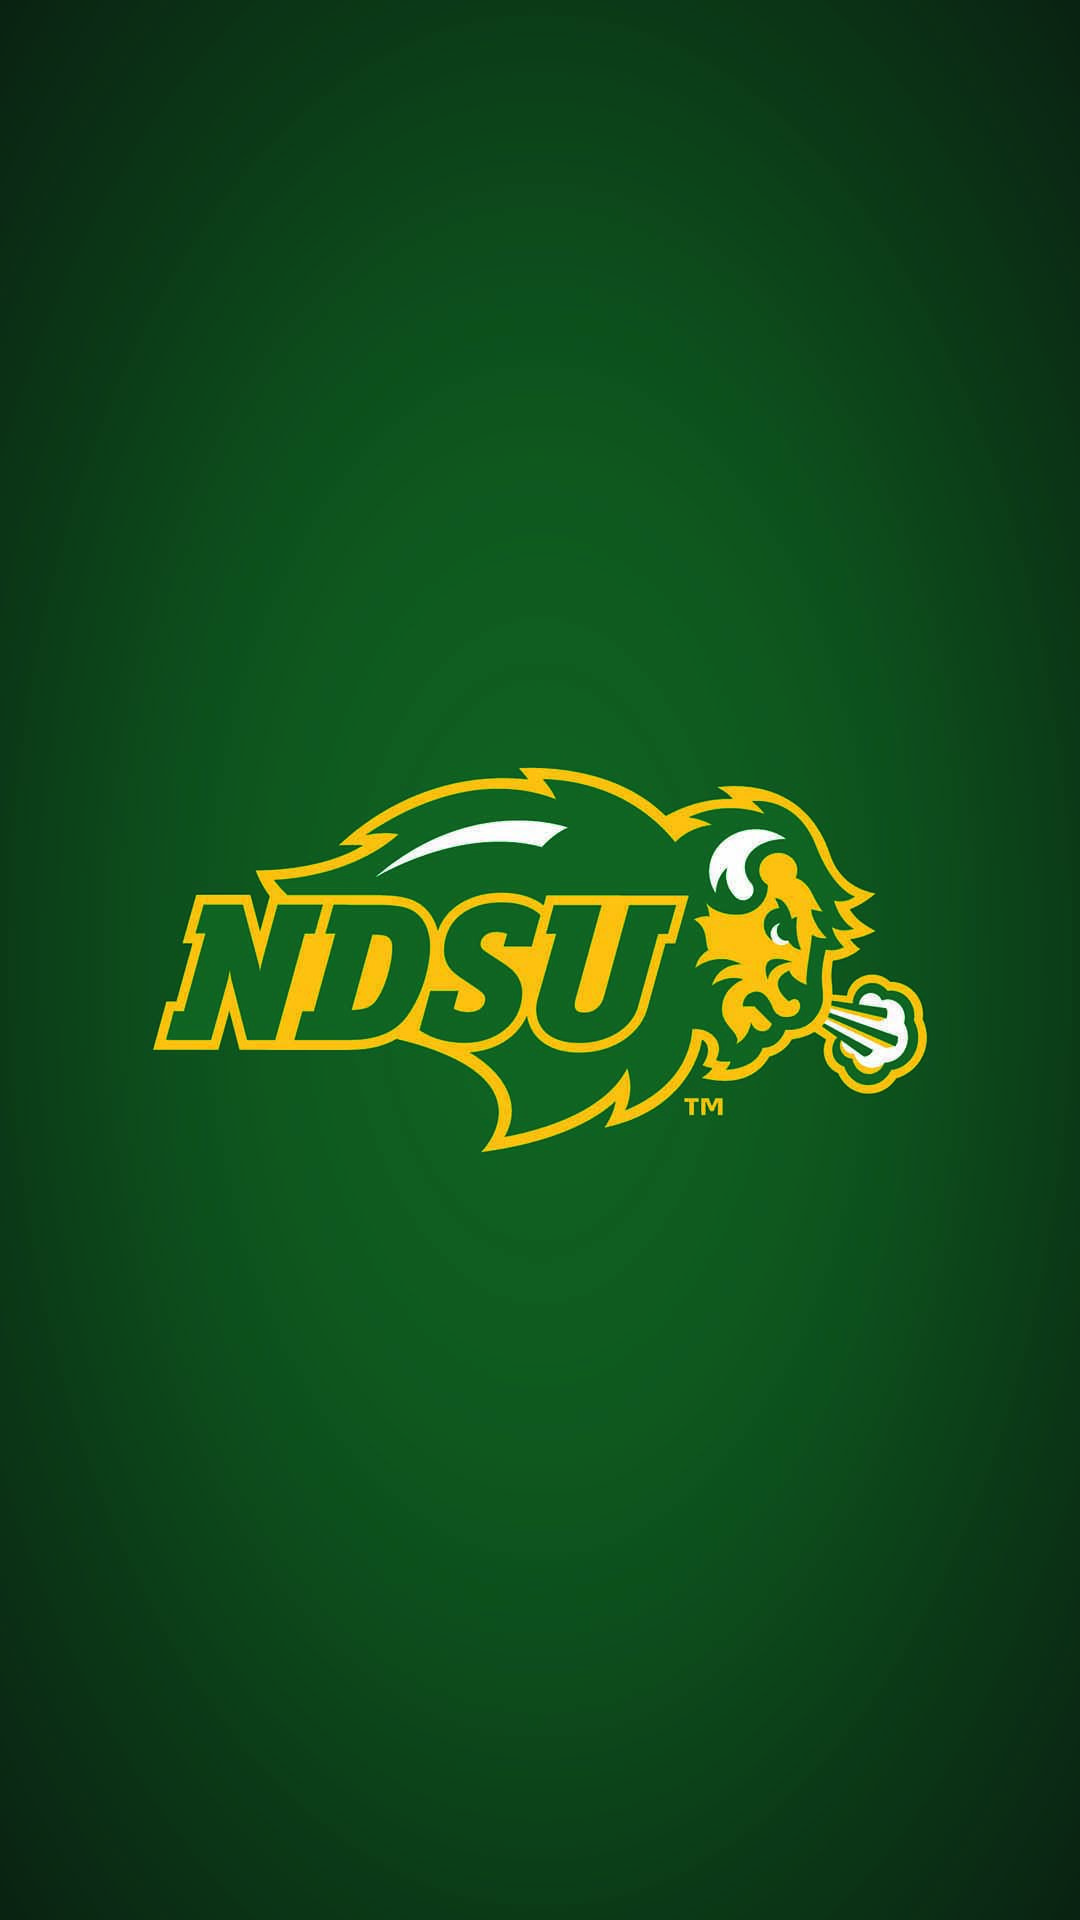 ND Bison Logo - Wallpaper | University Relations | NDSU